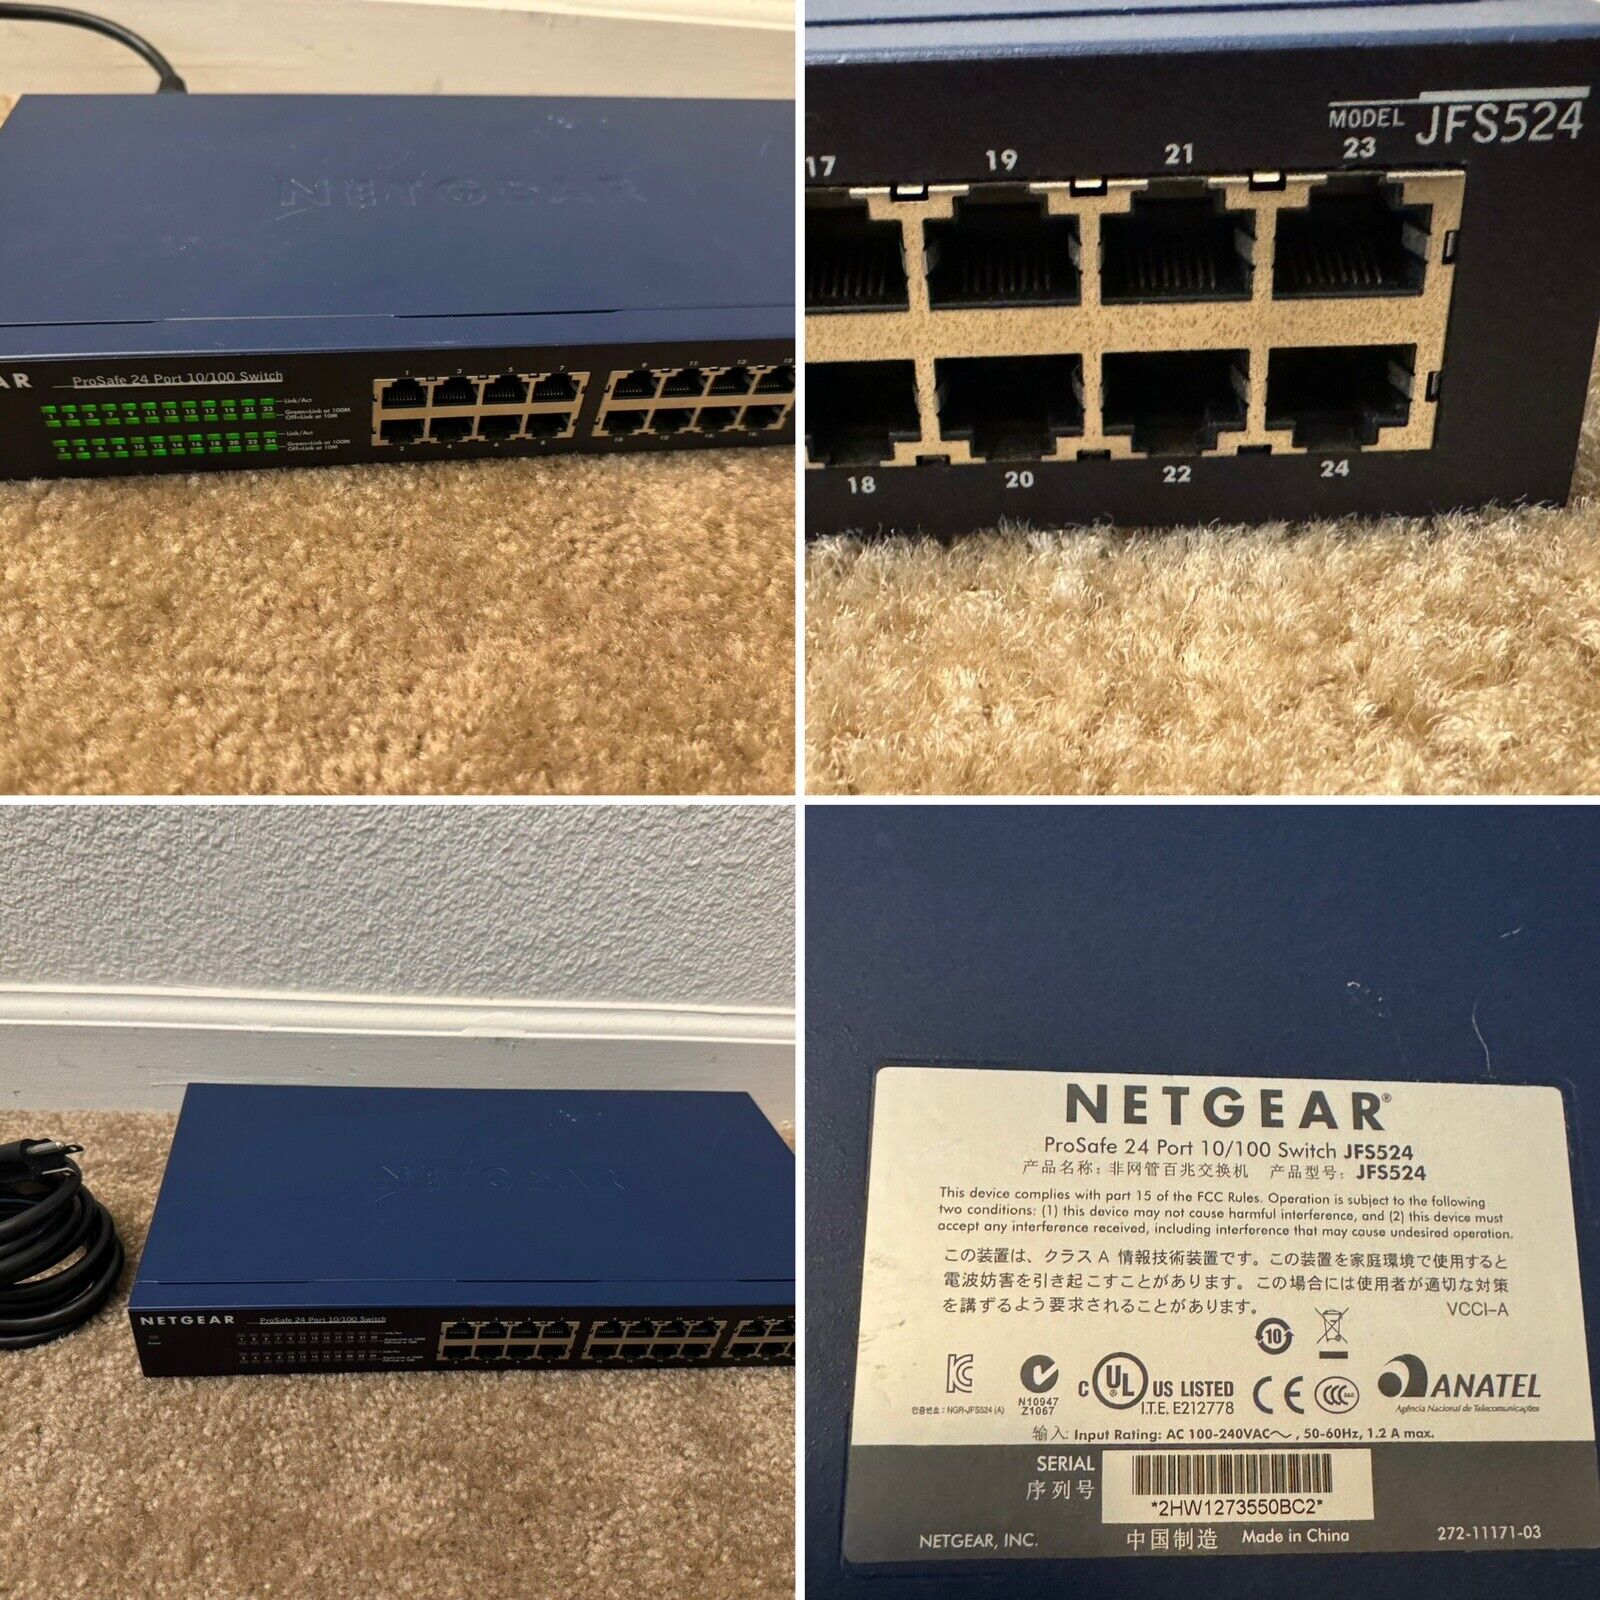 Netgear JFS524 ProSafe 24 Port 10/100 Fast External Ethernet Switch TESTED